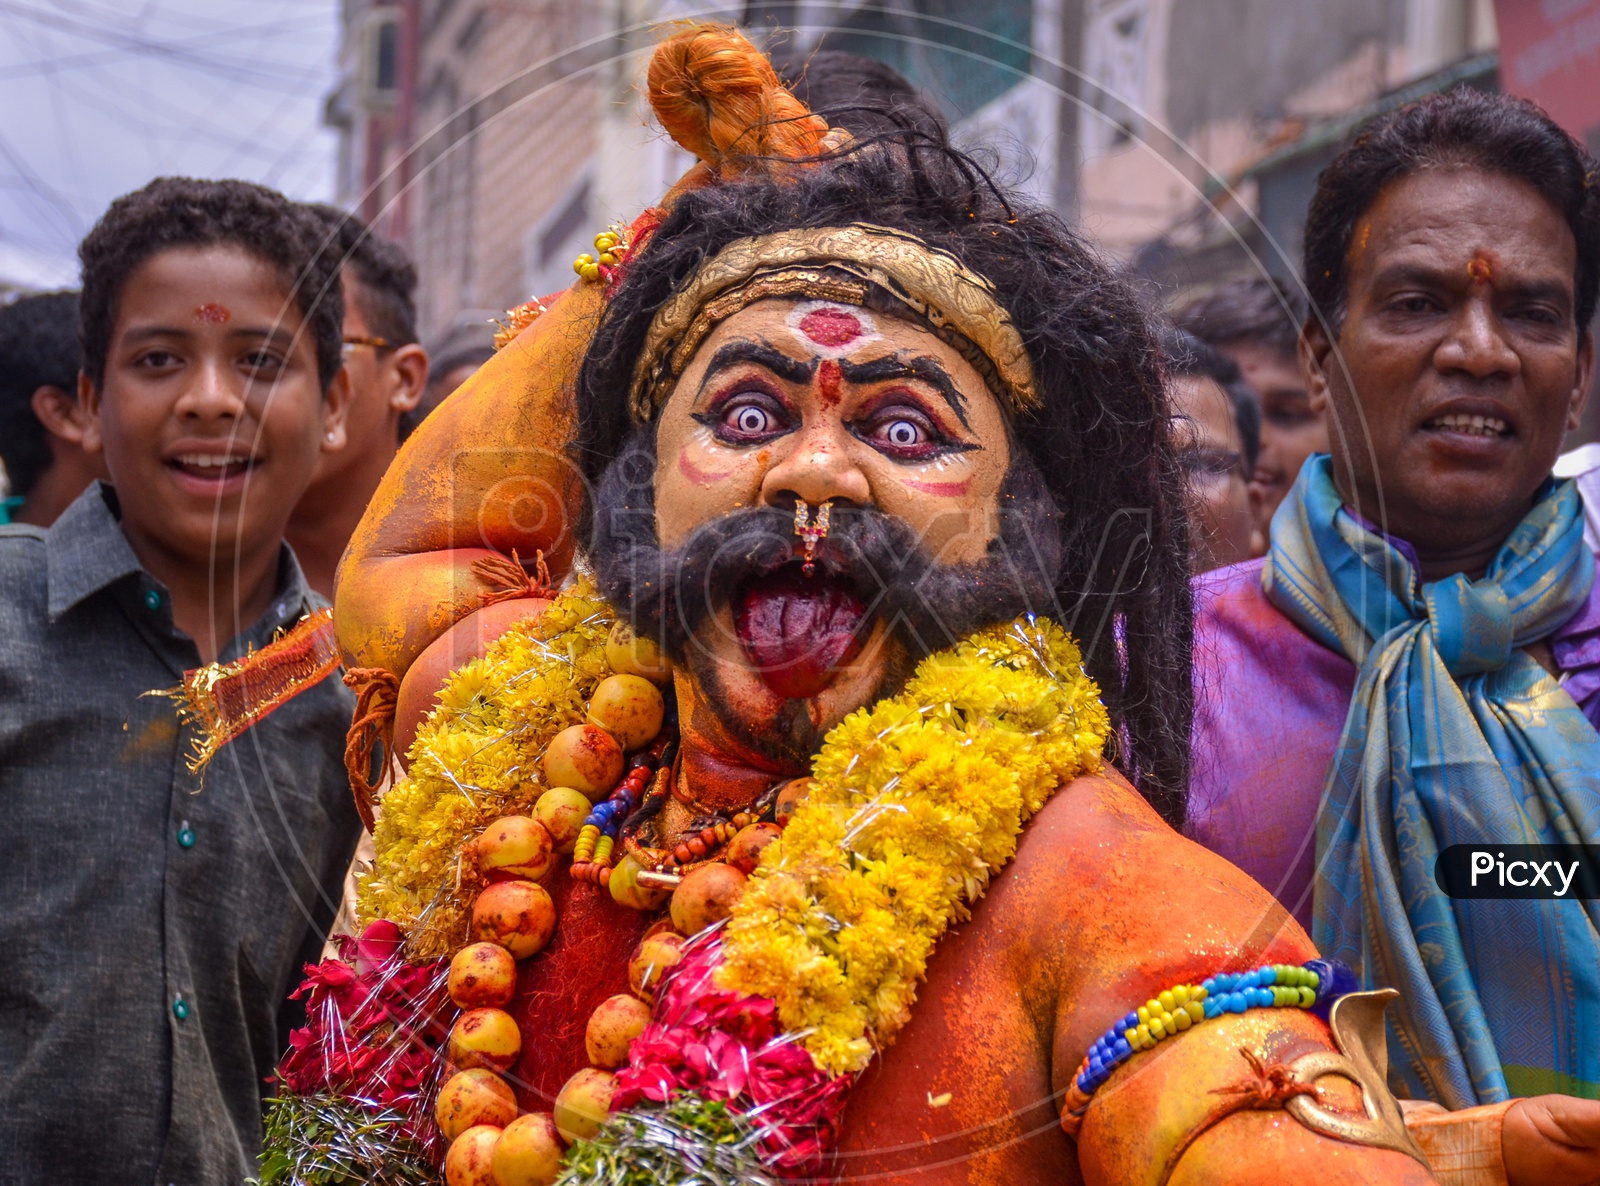 Image Of Potharaju At Bonalu Festivities Av836367 Picxy